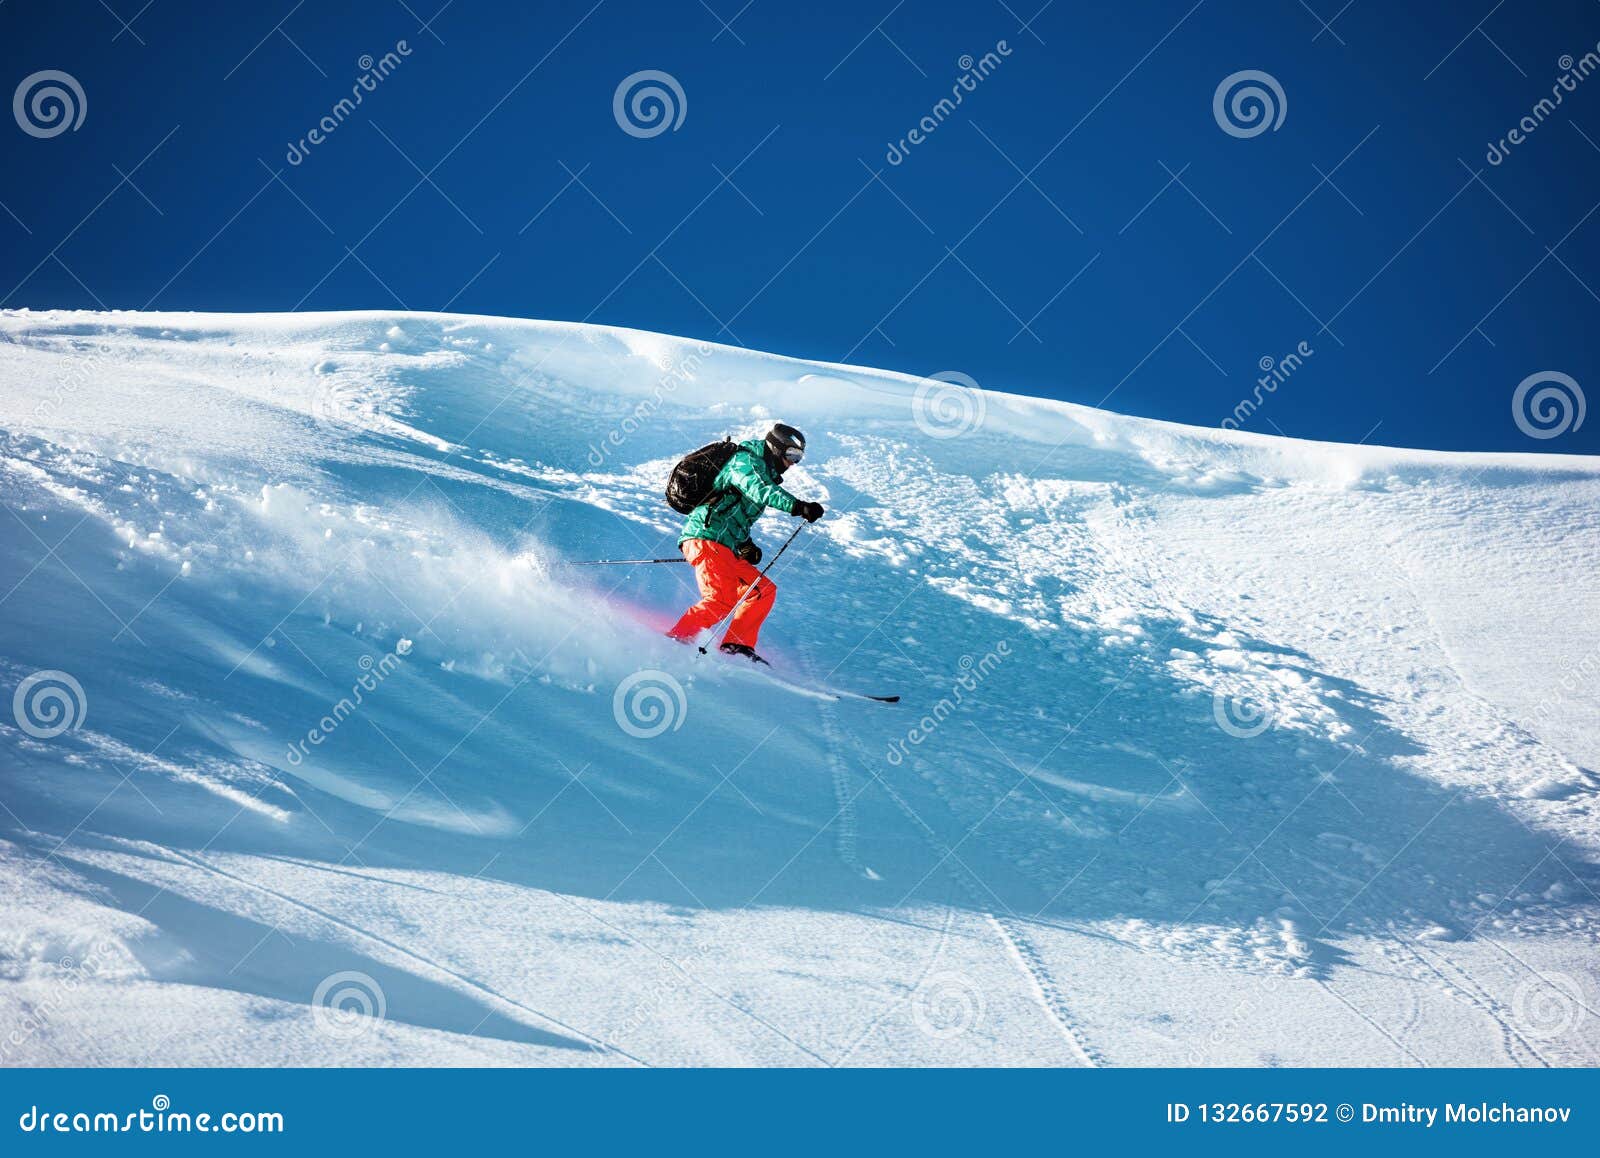 skier downhill backcountry ski freeride